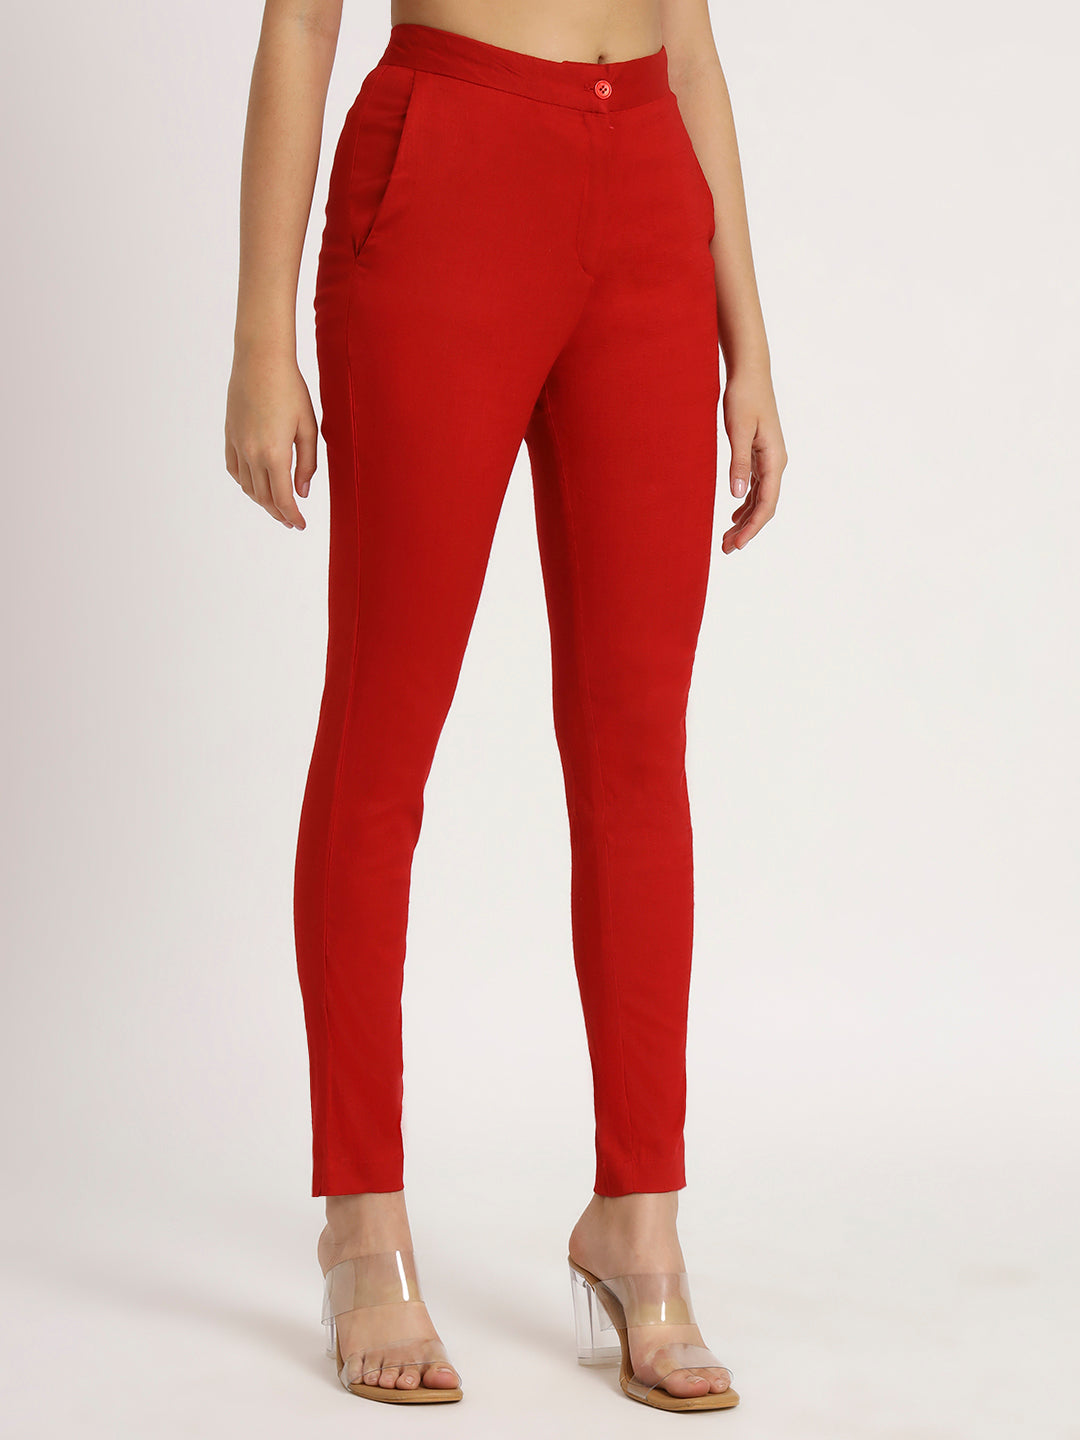 Lava Red Lycra Pants